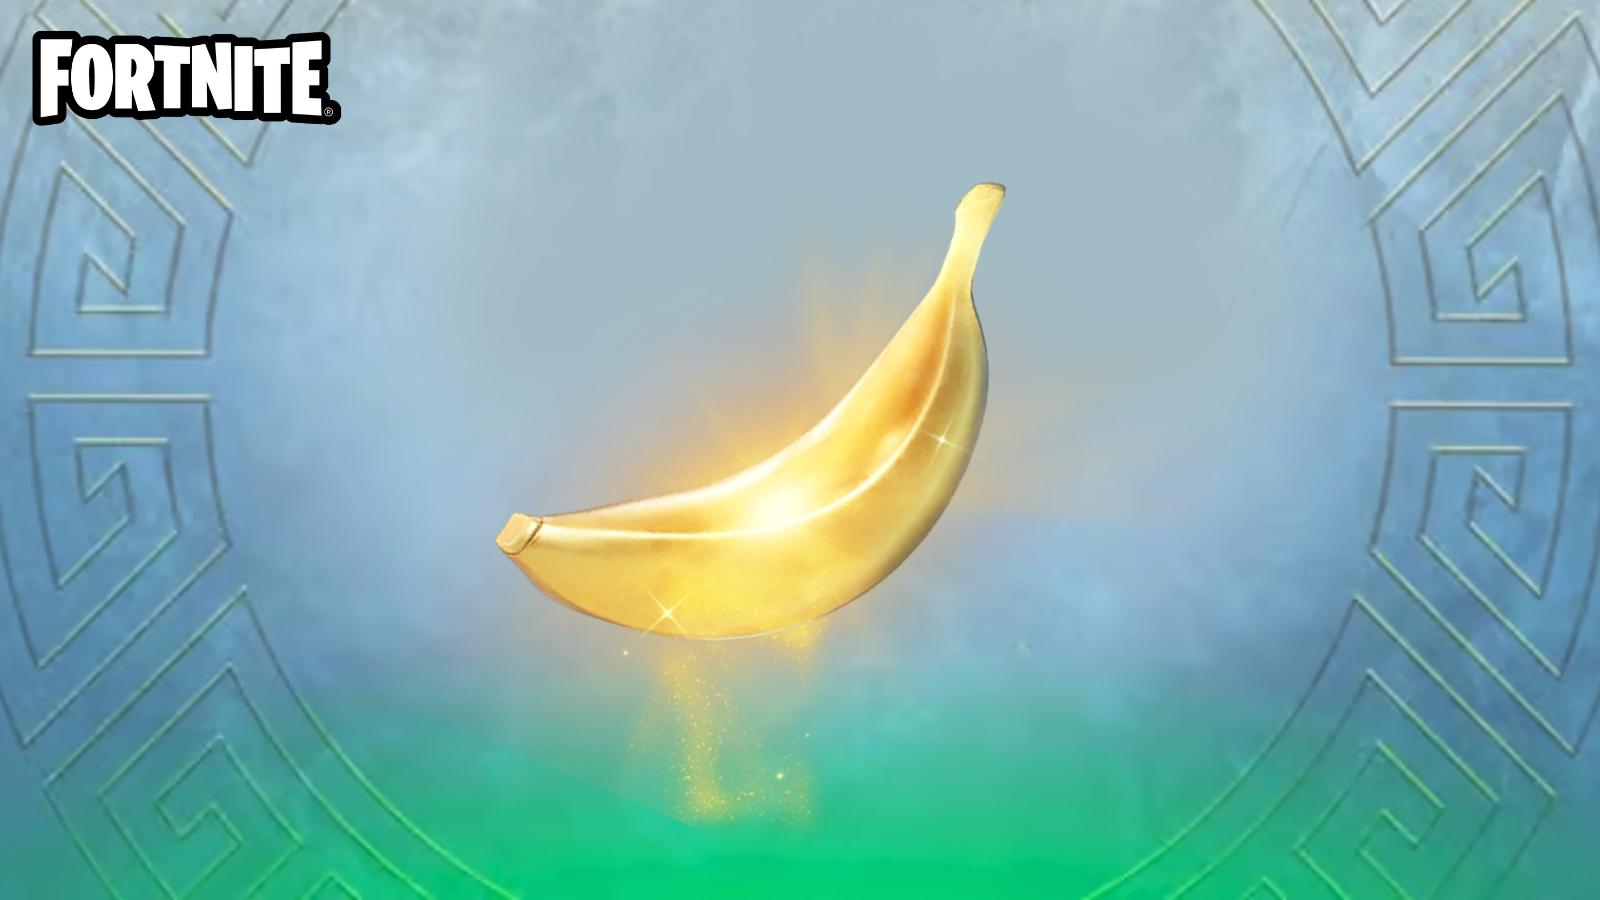 Fortnite Banana of the Gods mythic